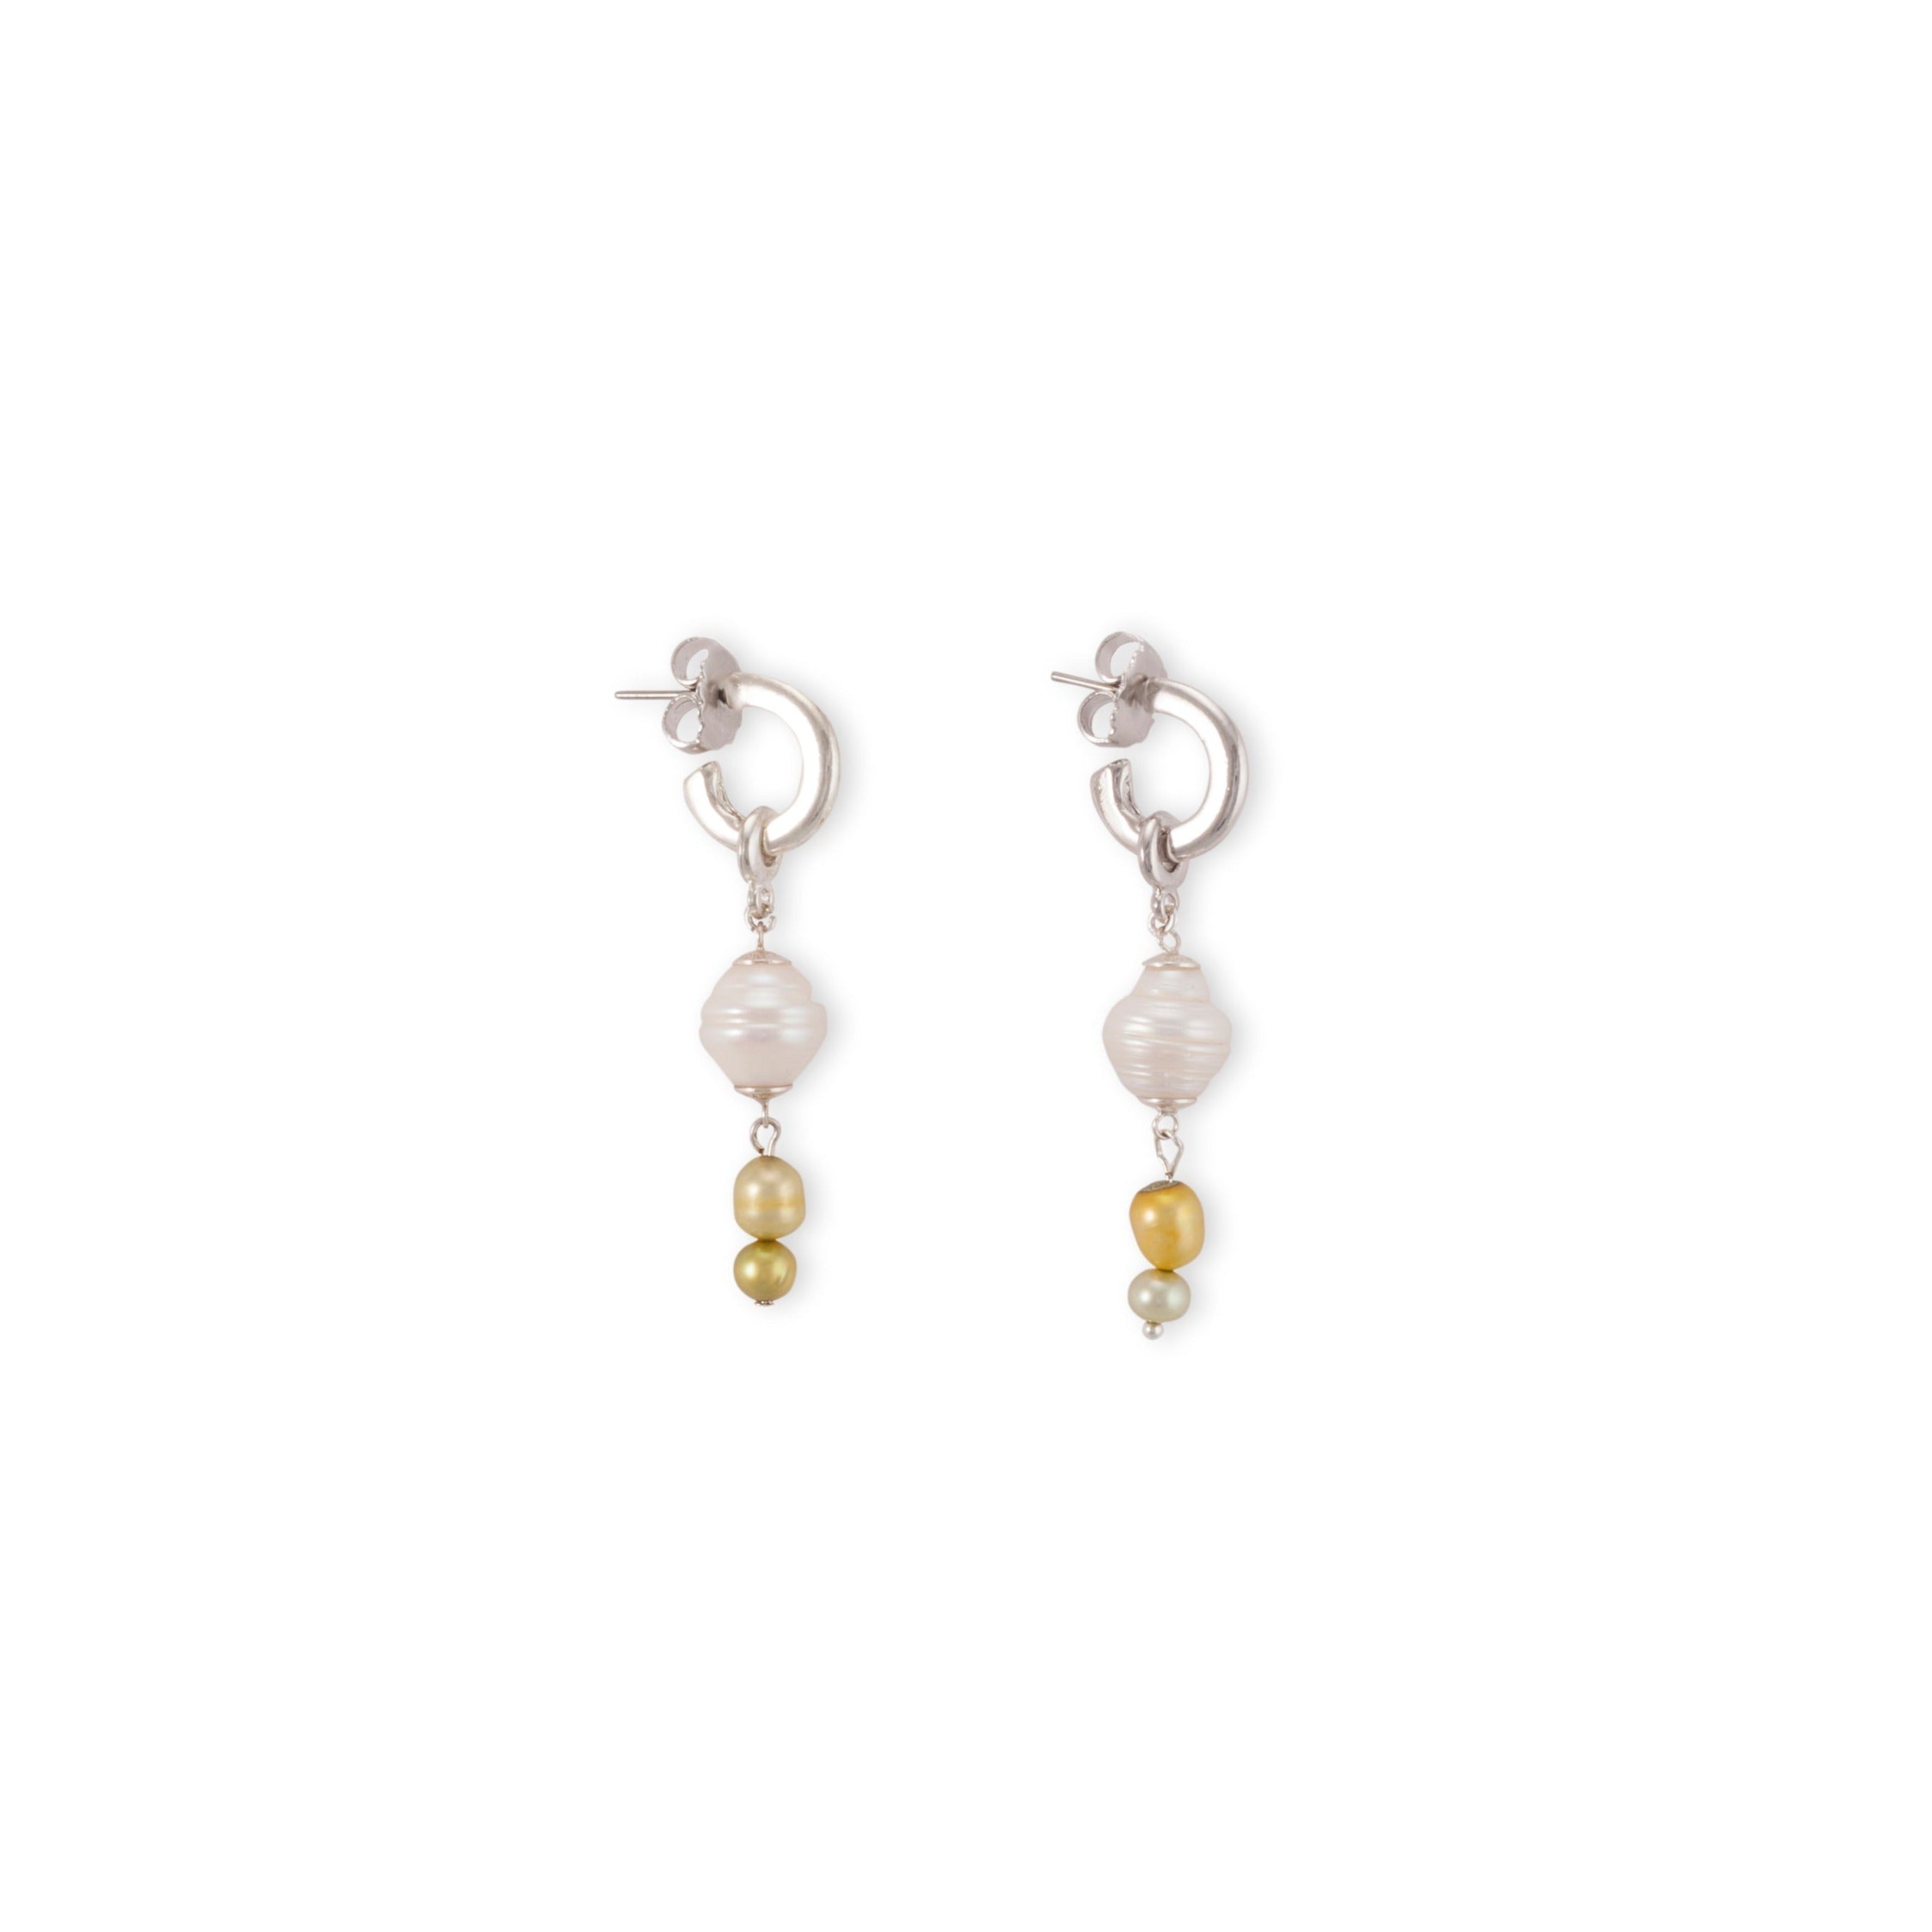 Silver Genuine Baroque Pearls with Semi Precious Stone Beads